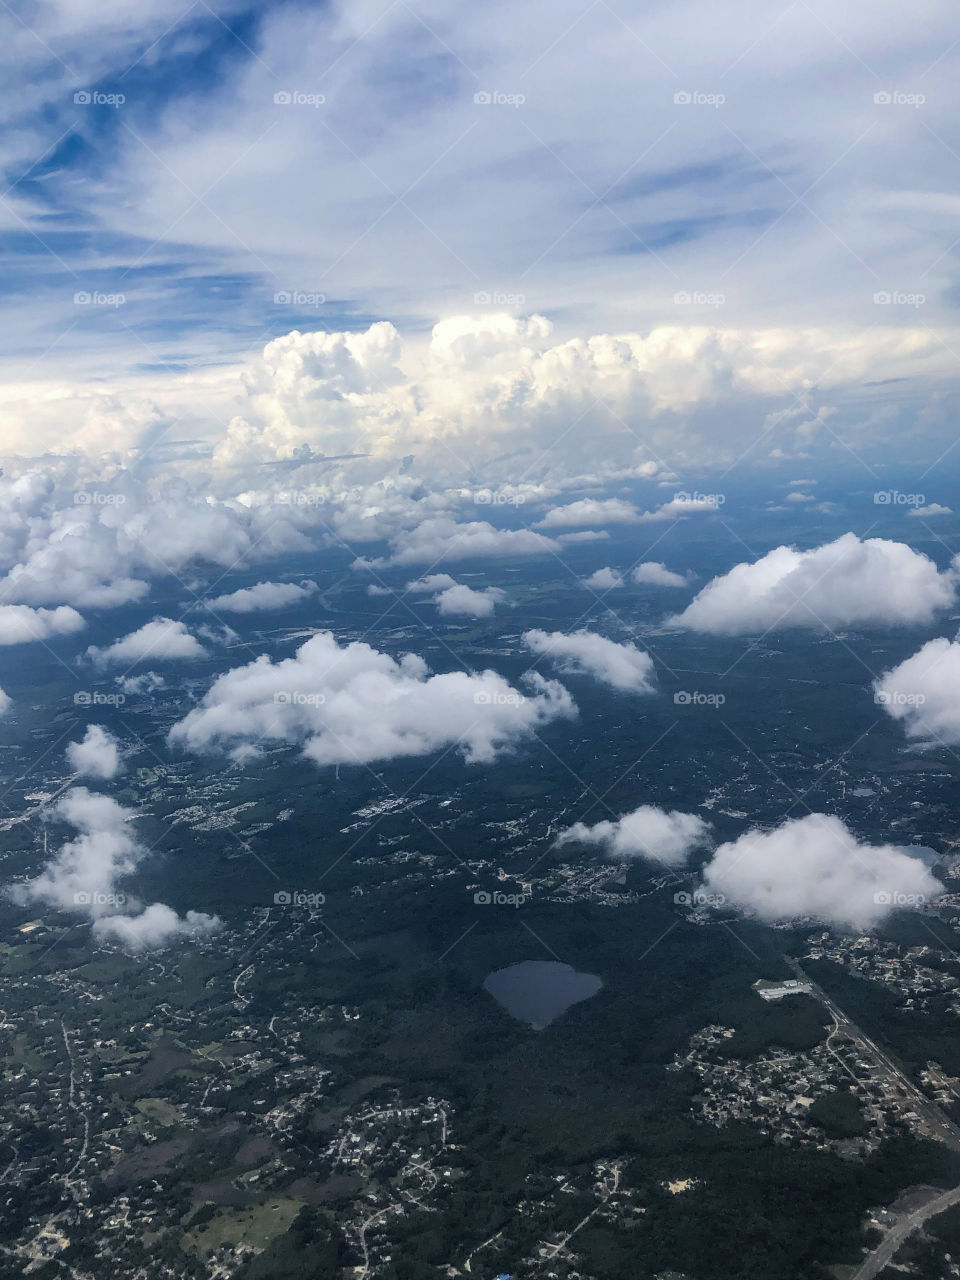 Let’s Fly: Landing in Florida